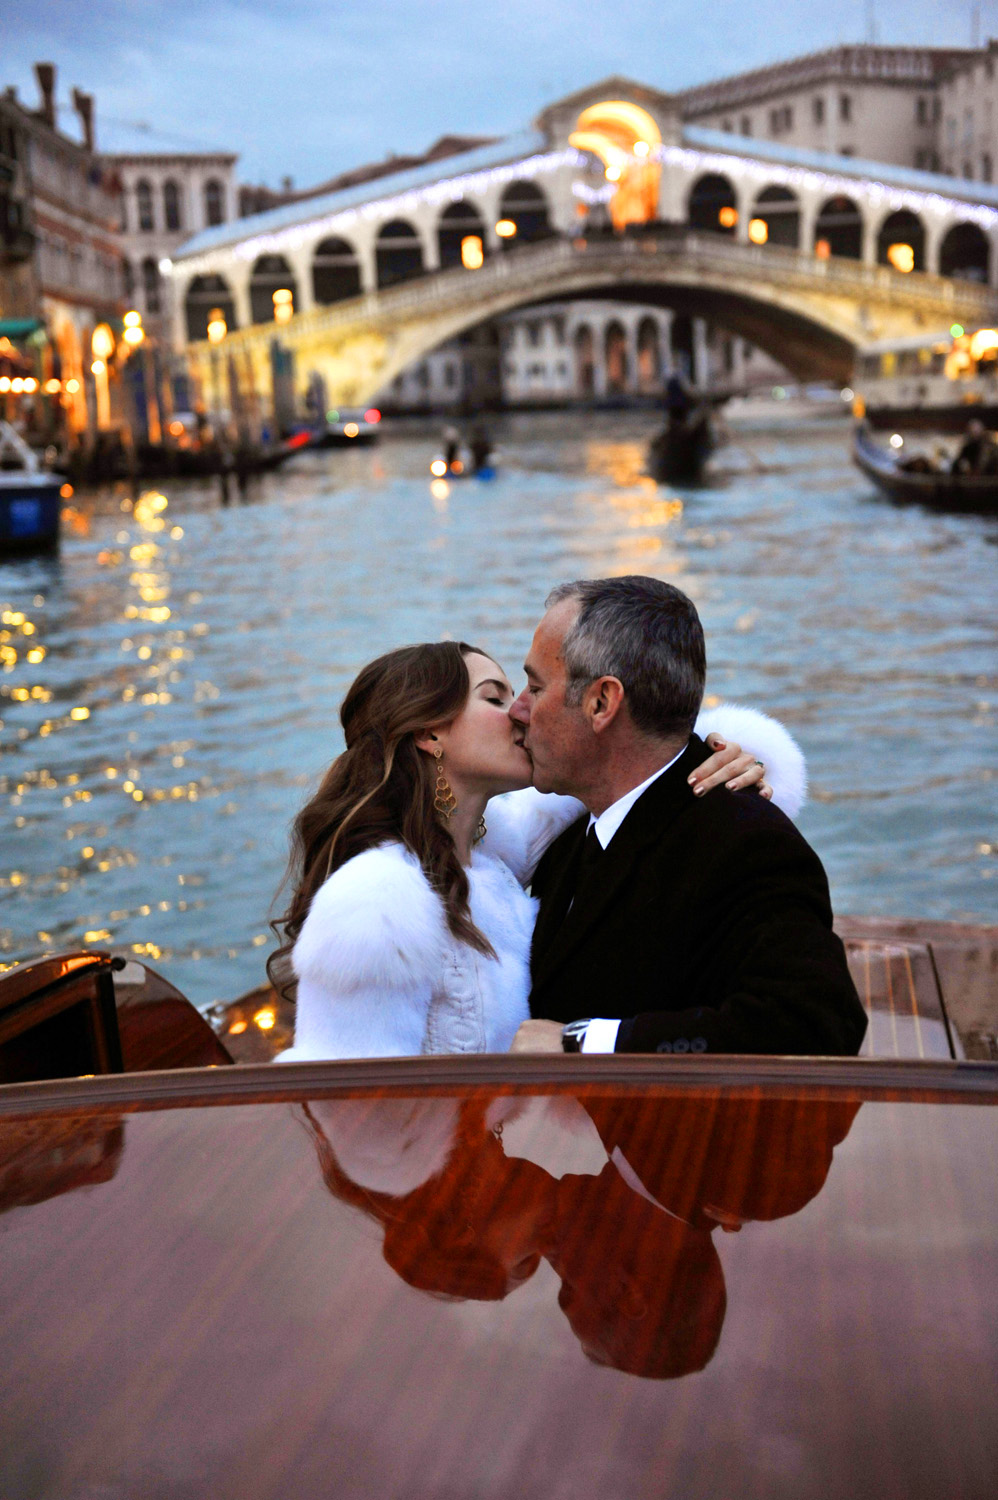 Moscha and Nikos Venice wedding in Italy at Ca' Sagredo Hotel, photographed by wedding photographer Venice XOANDREA